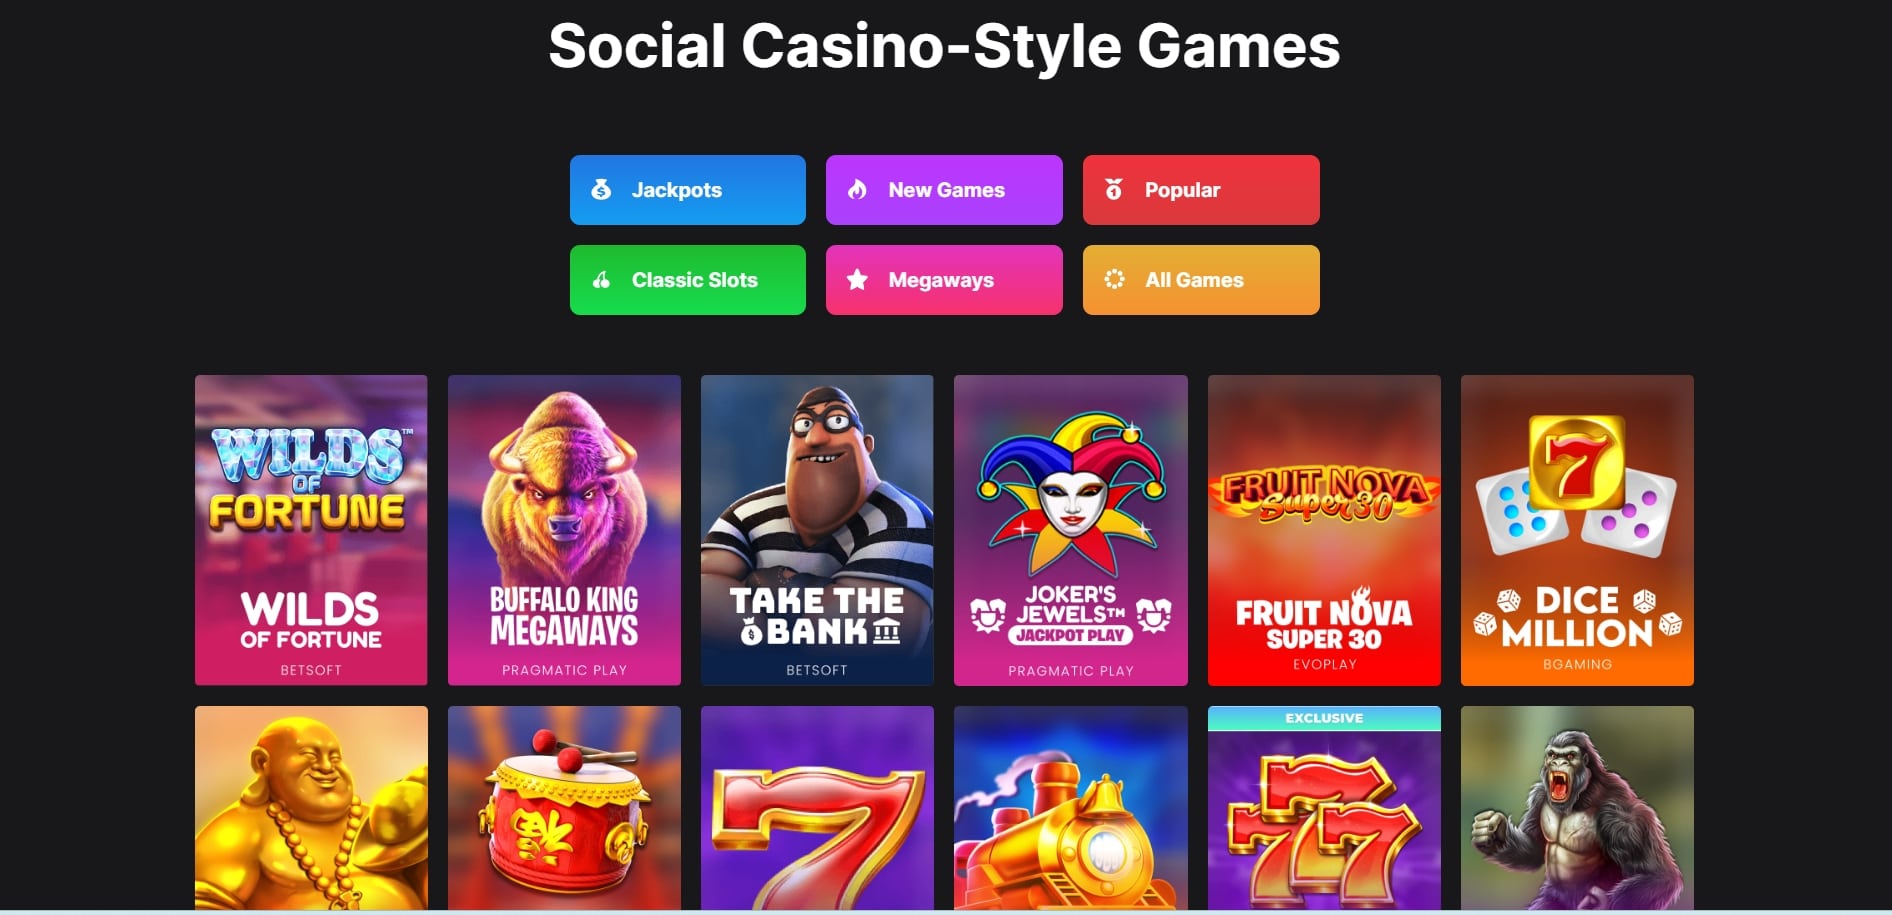 Wow vegas social casino homepage image